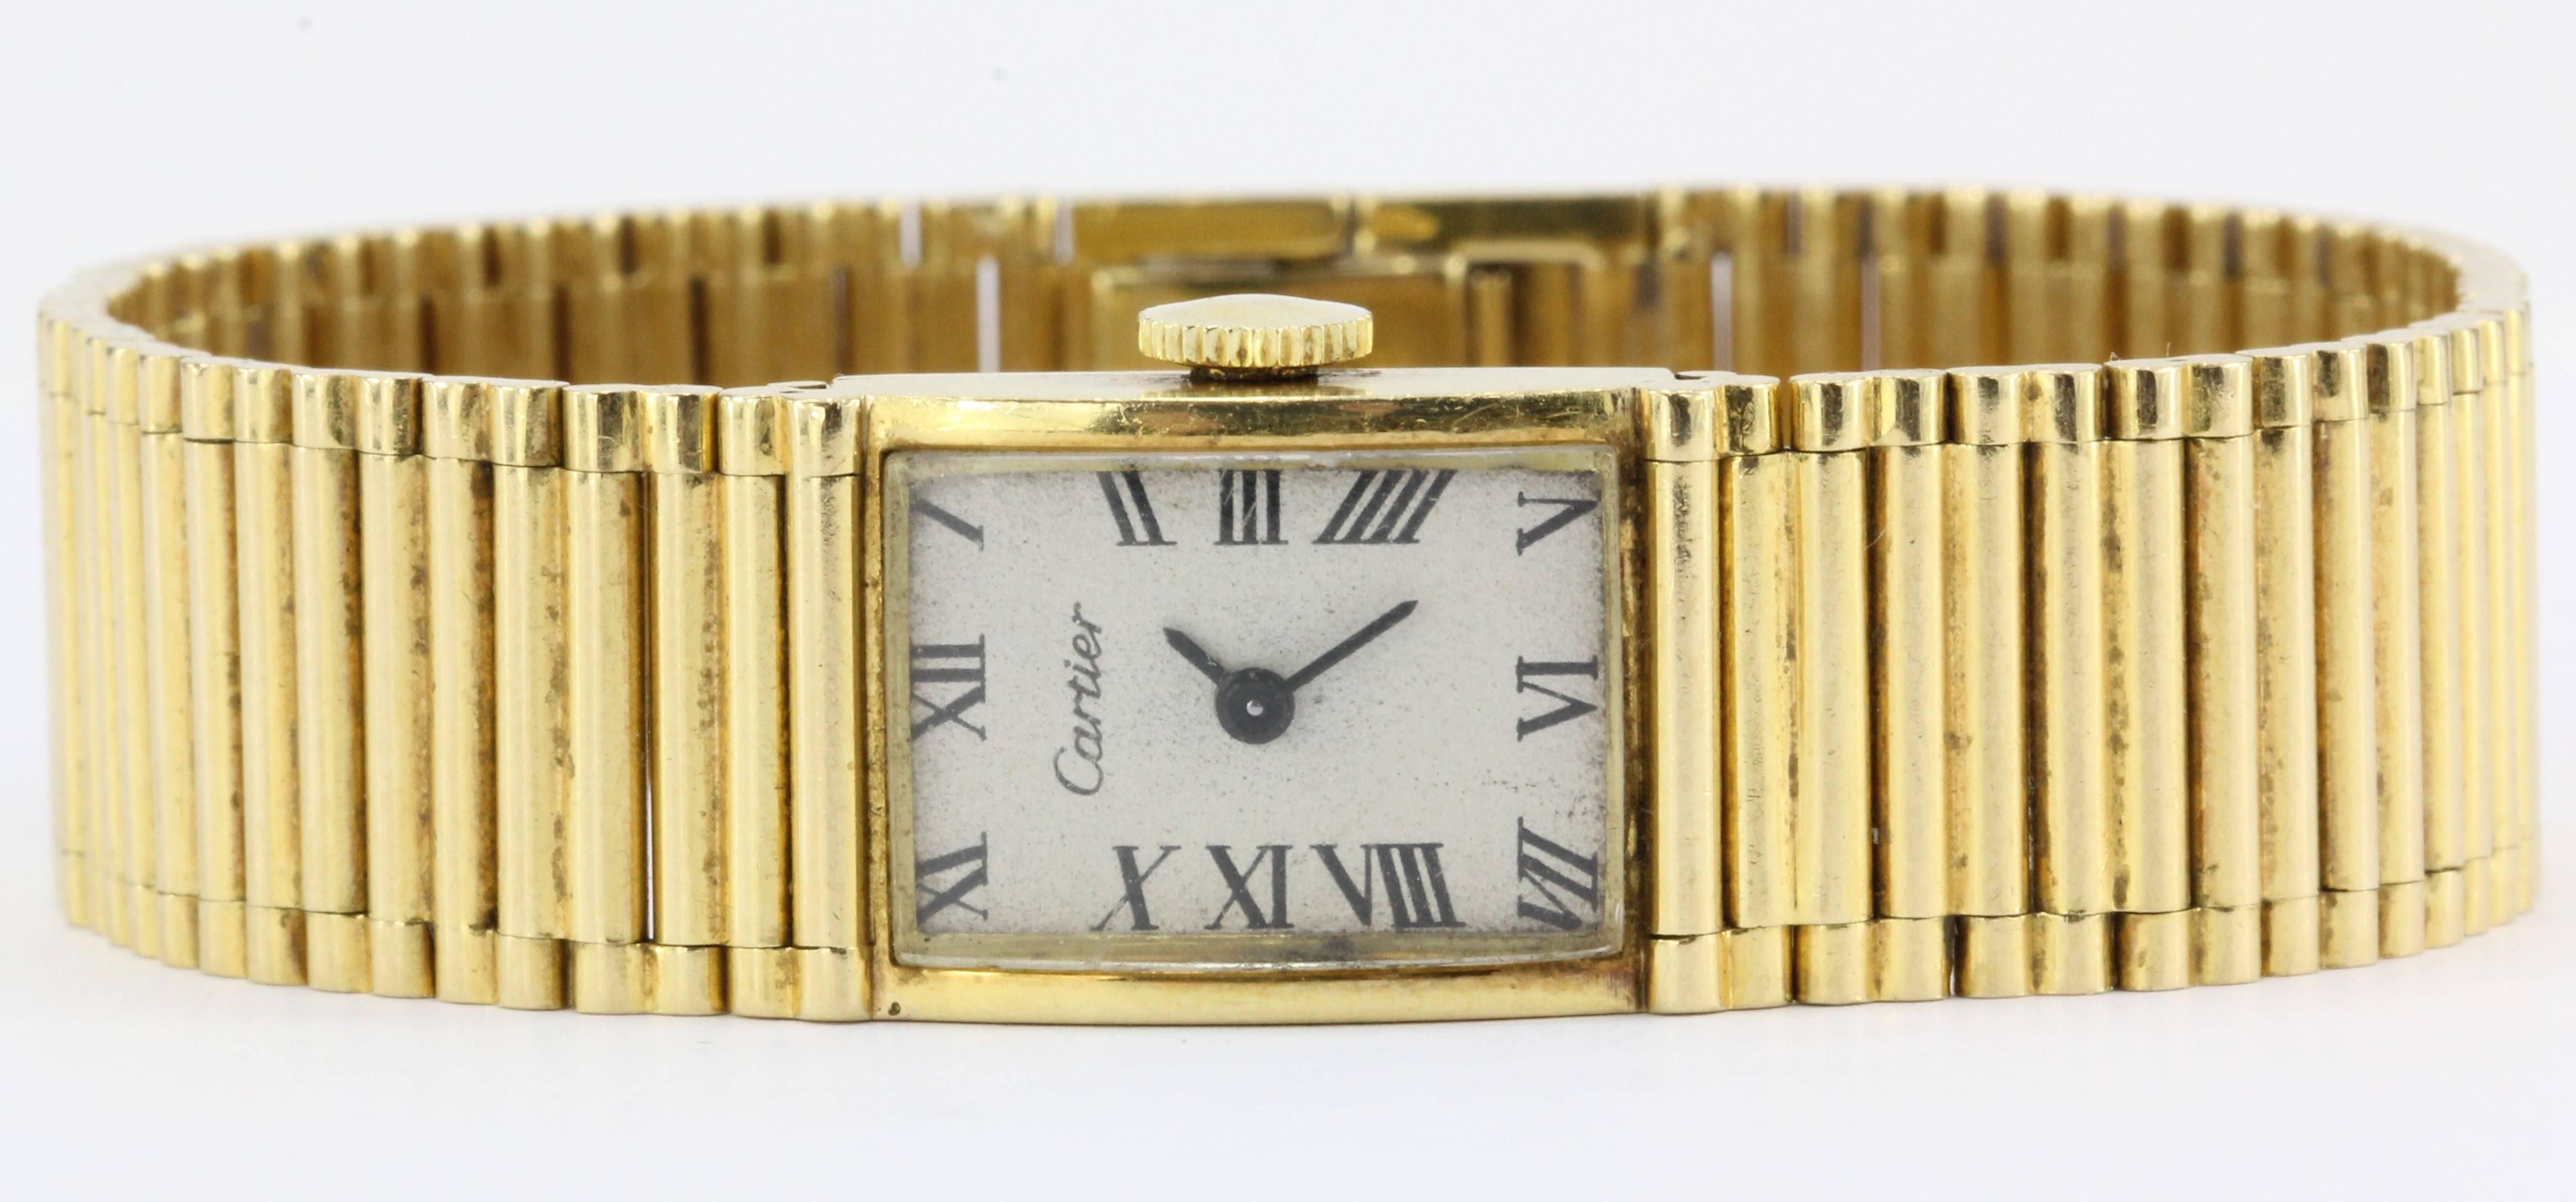 Vintage Cartier 18K Gold Girard Perregaux Tank Watch c.1950's